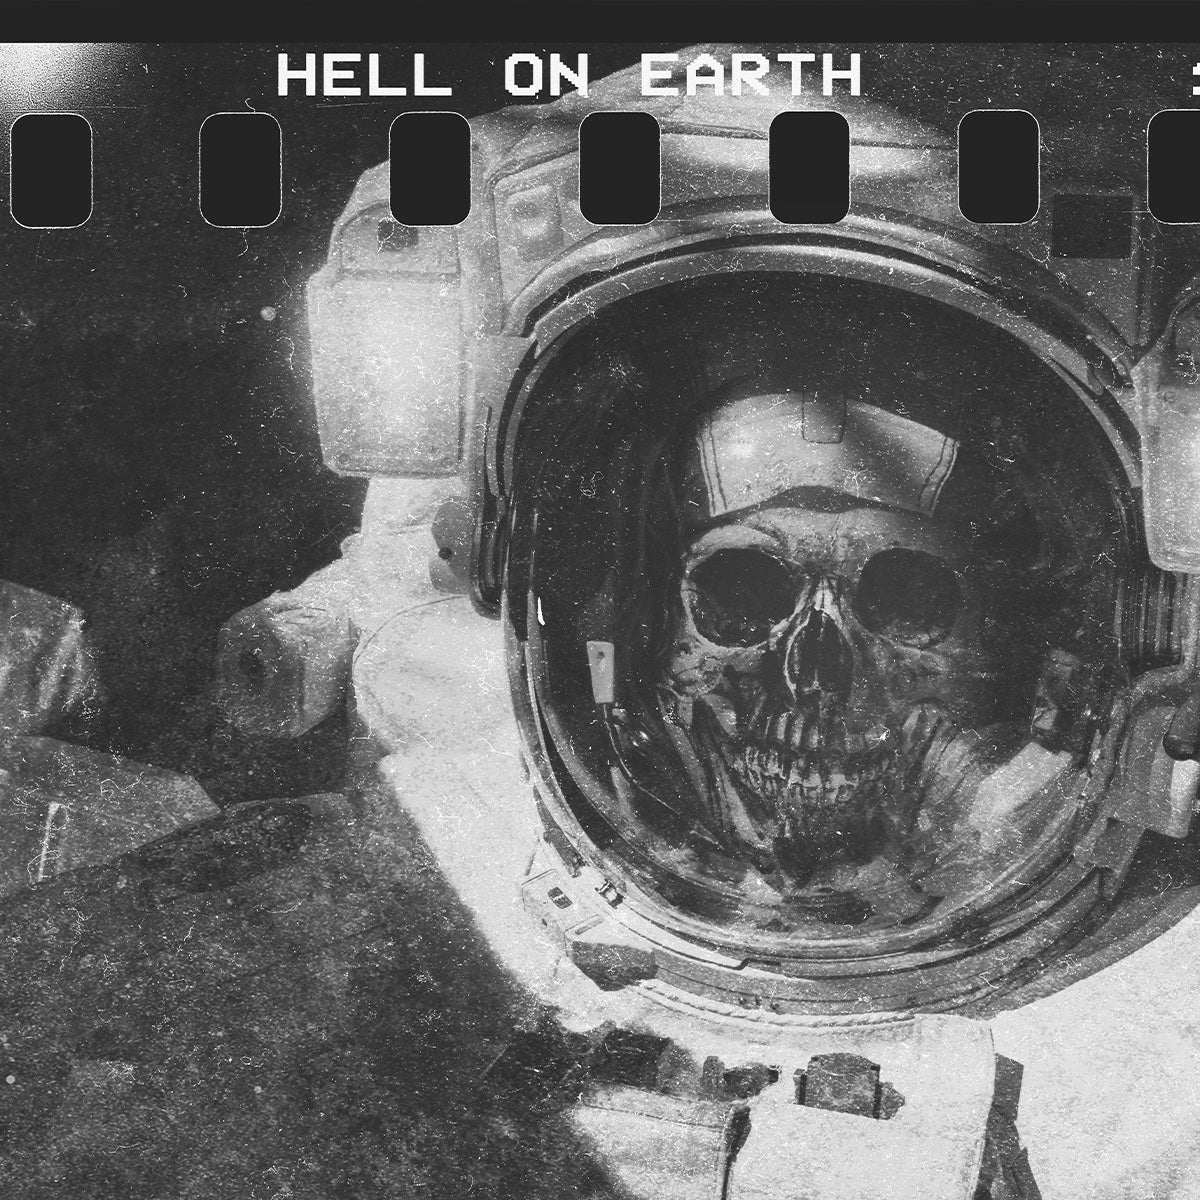 Dead Astronaut Poster